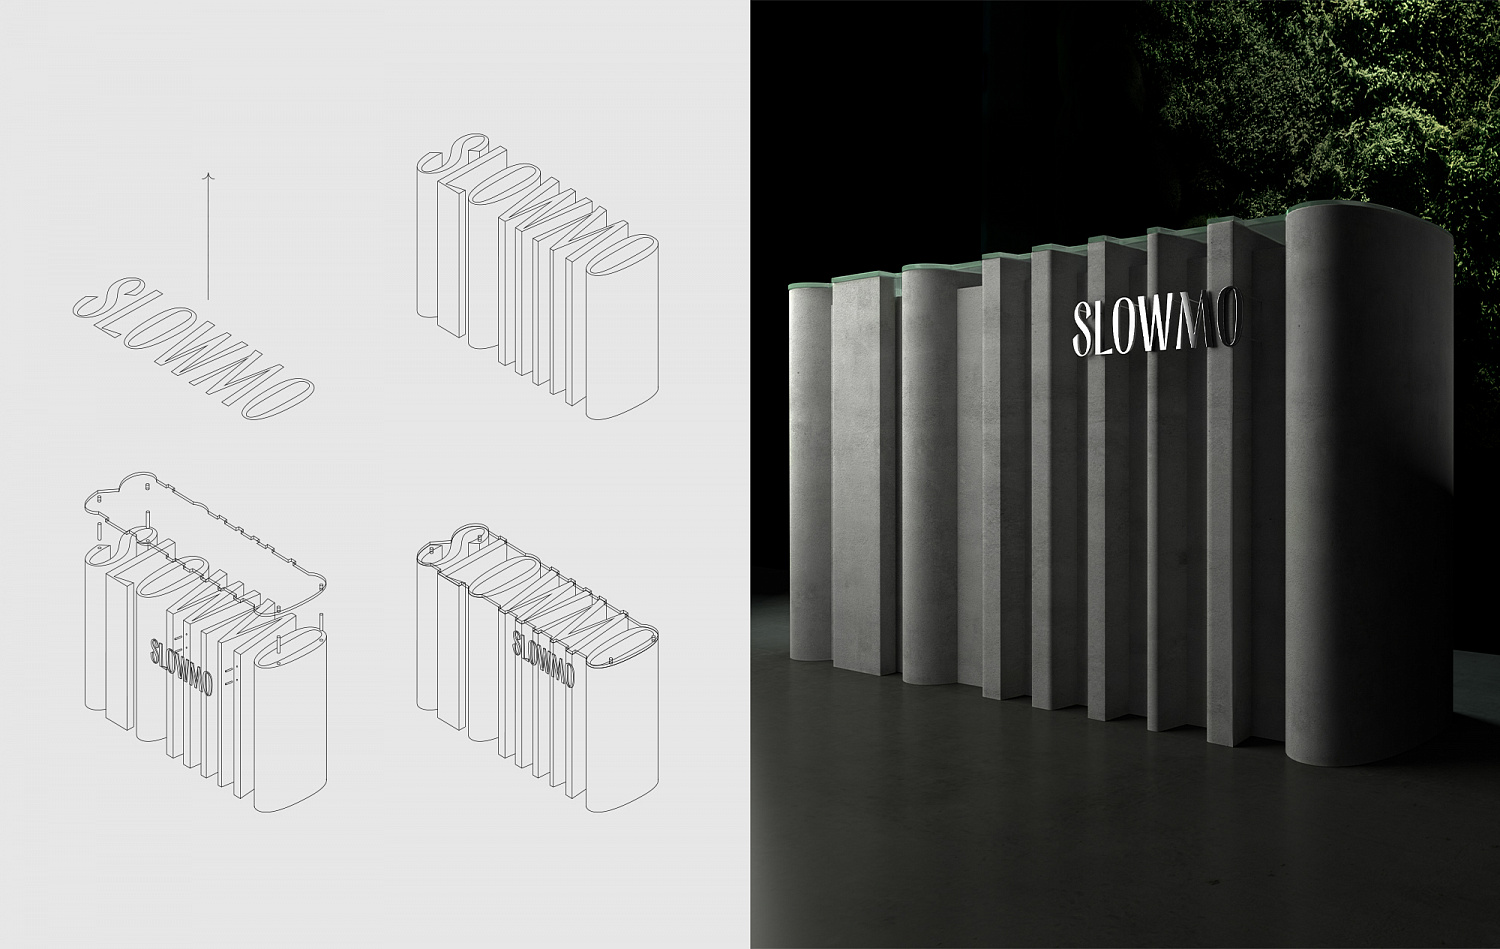 SLOWMO: нейминг, фирменный стиль и слоган для салона красоты - Портфолио Depot